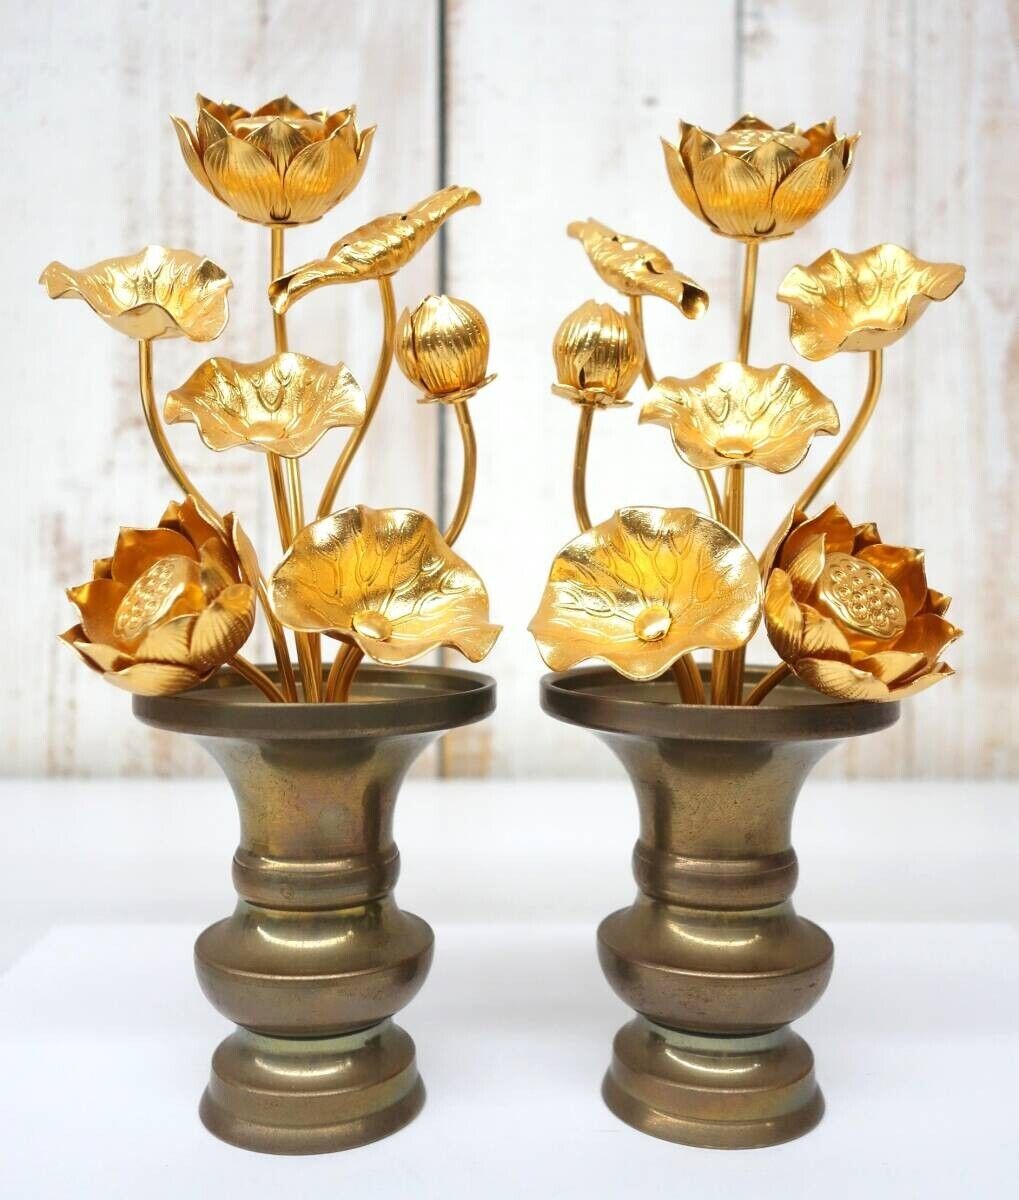 Japanese Vintage Buddhist Altar ware Flower 9inch tall ornament